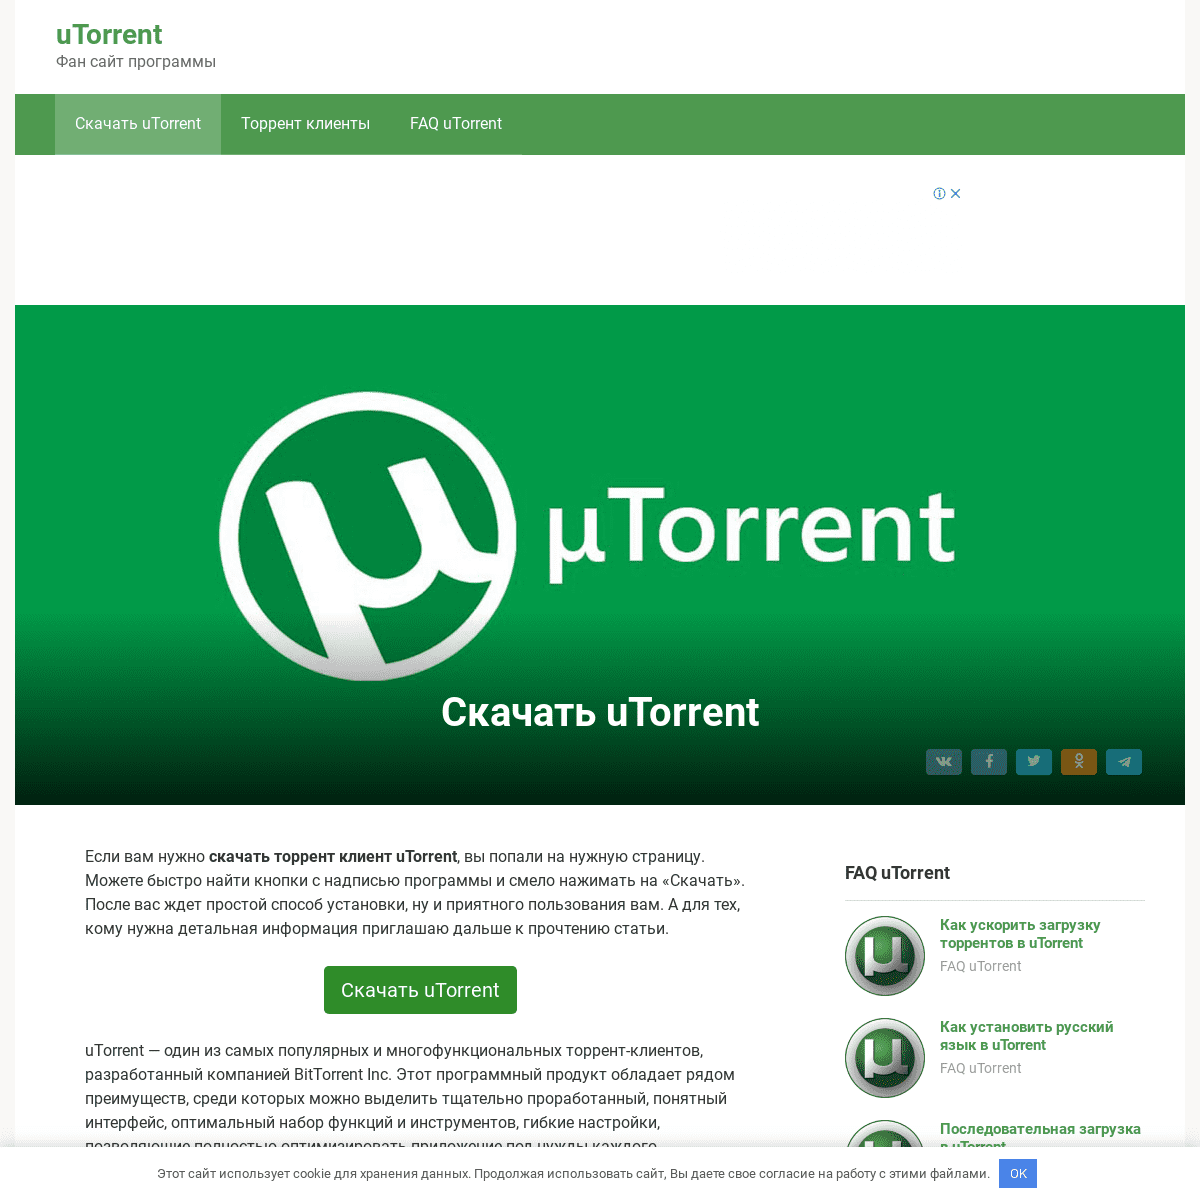 A complete backup of utorrentsoft.org